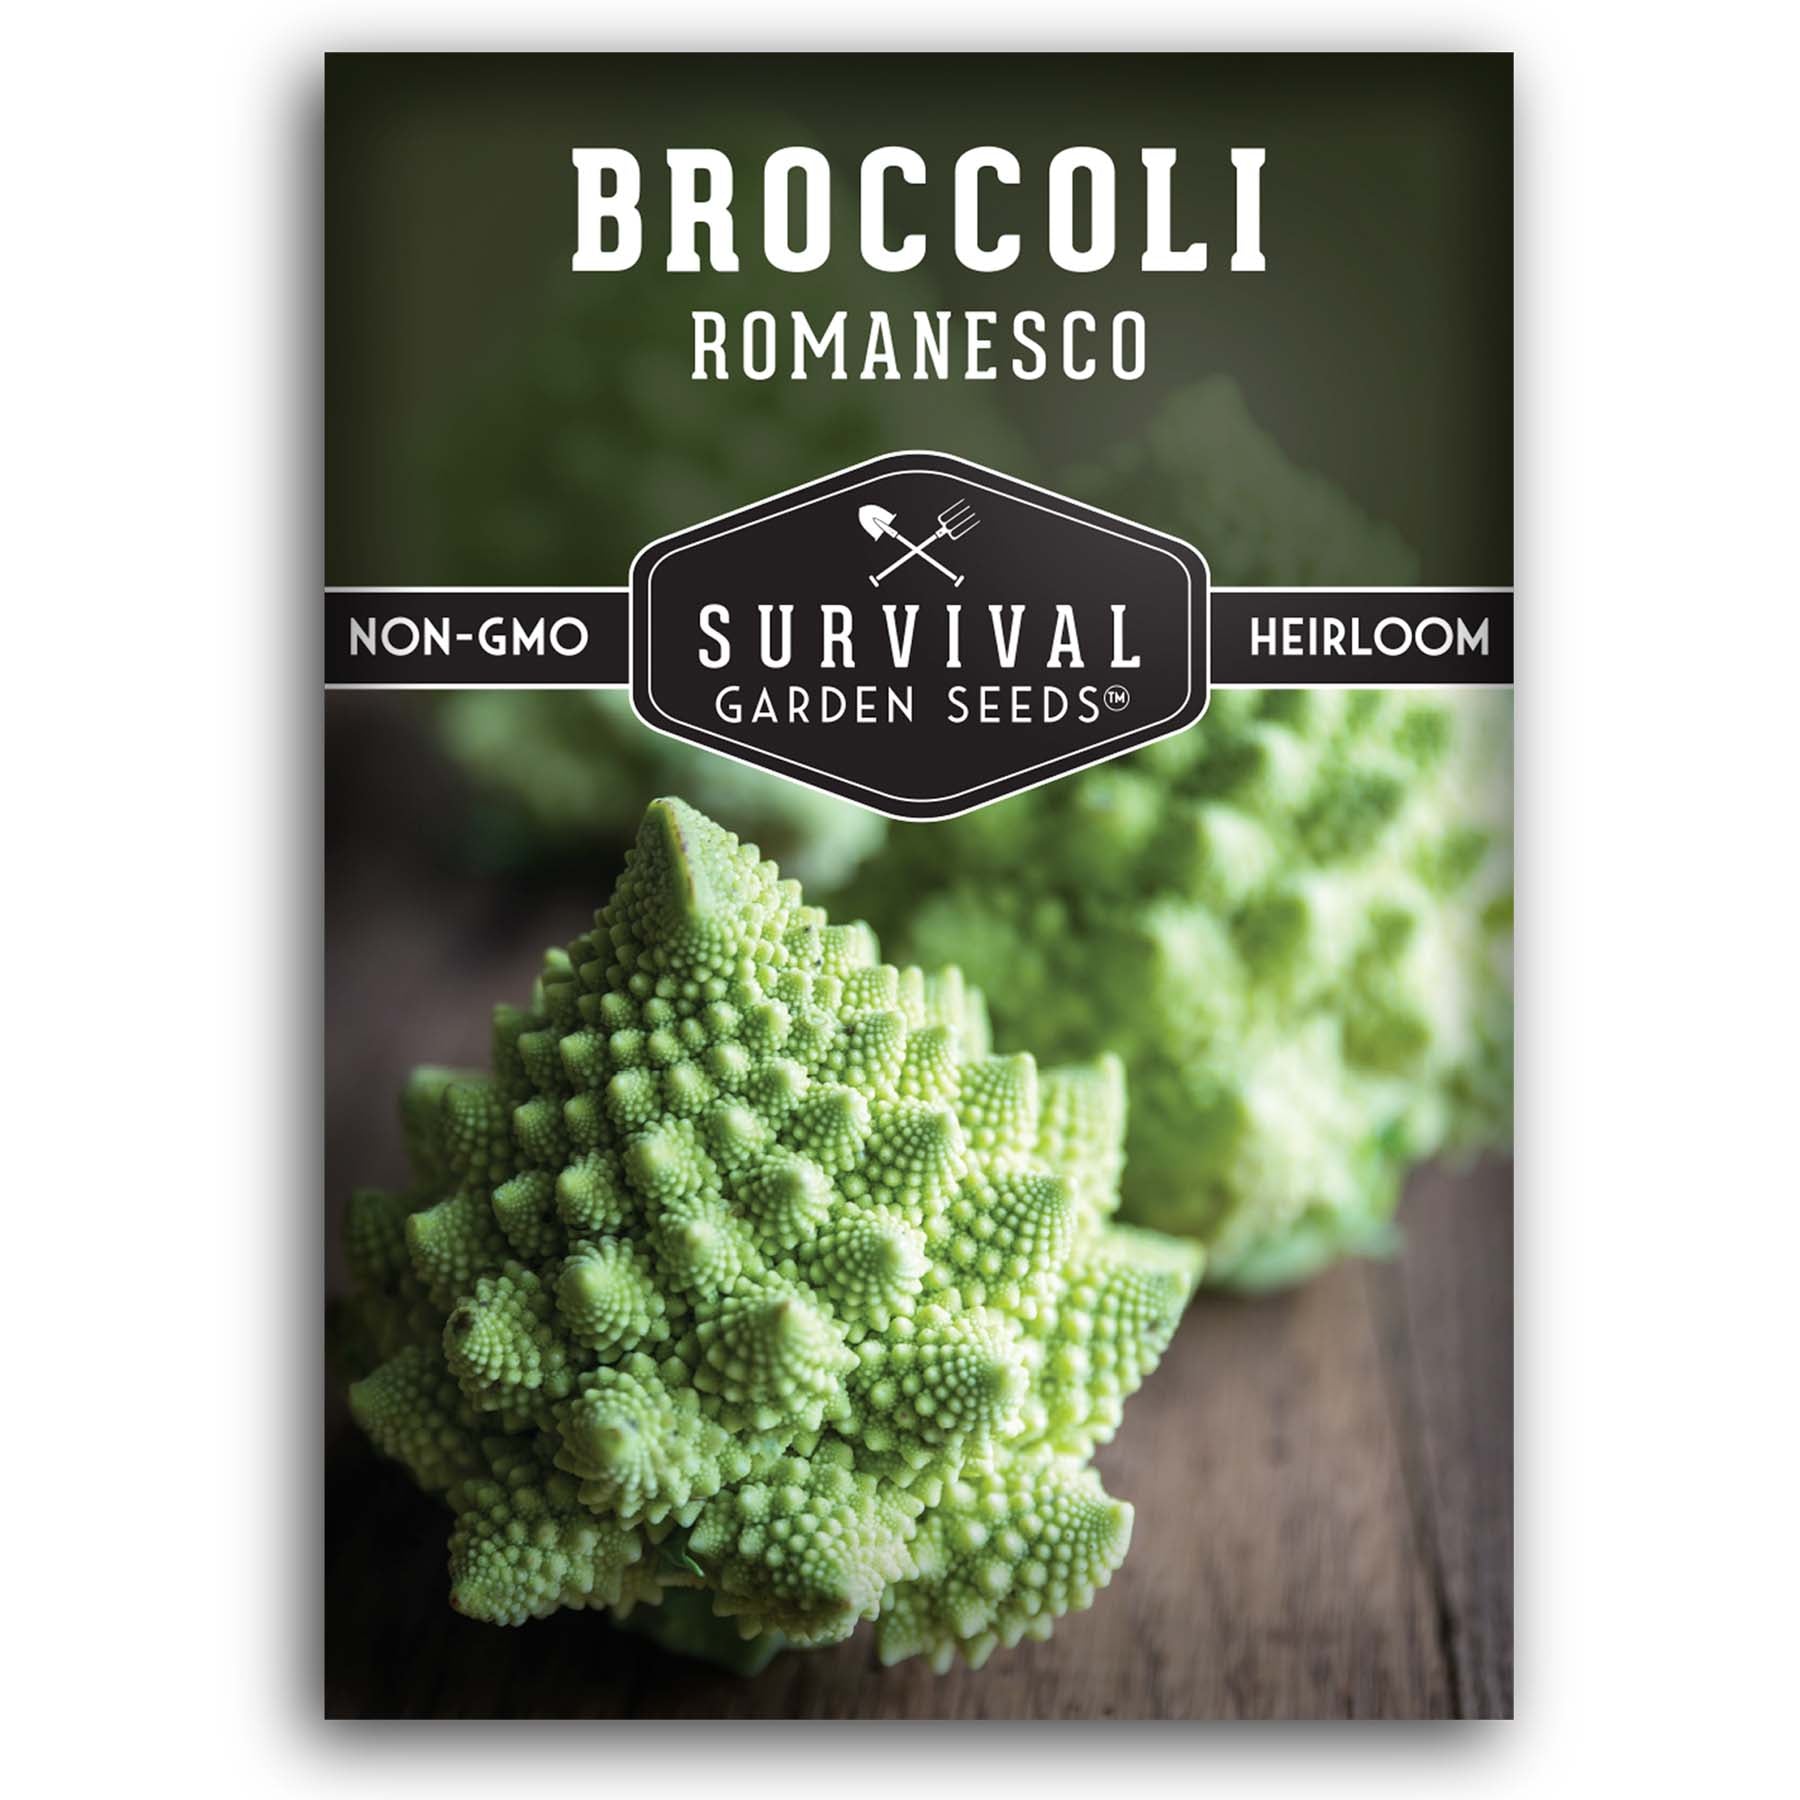 Romanesco Broccoli seeds for planting